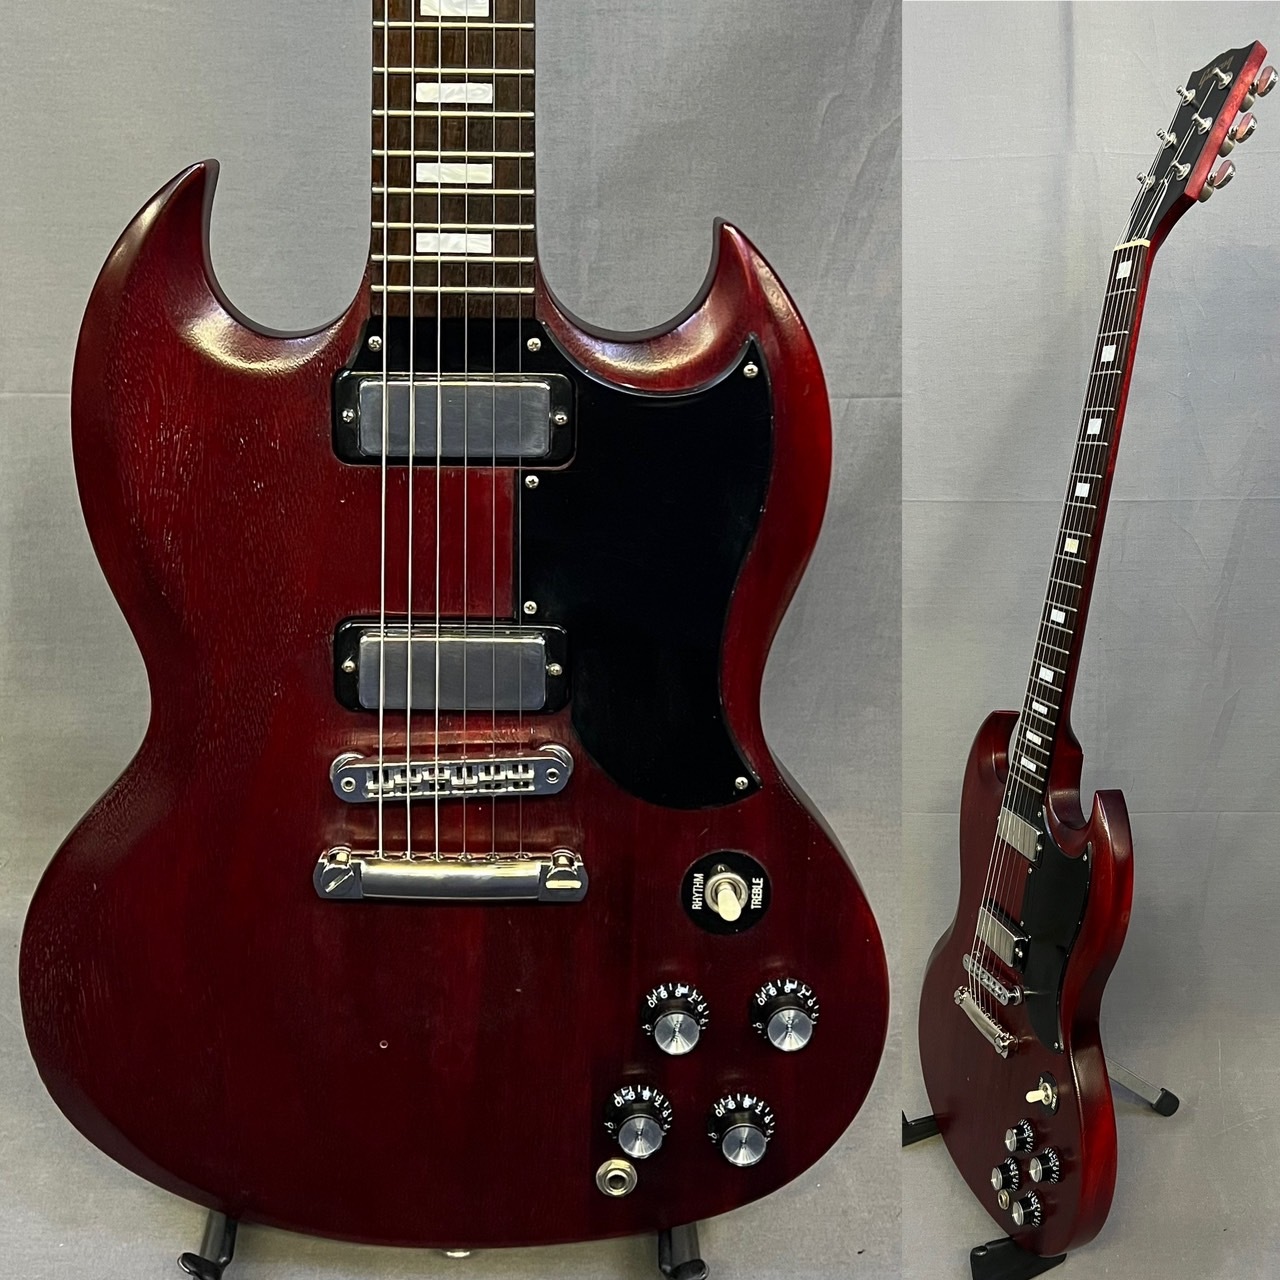 Gibson SGスペシャル 2016 ミニハム - 楽器、器材